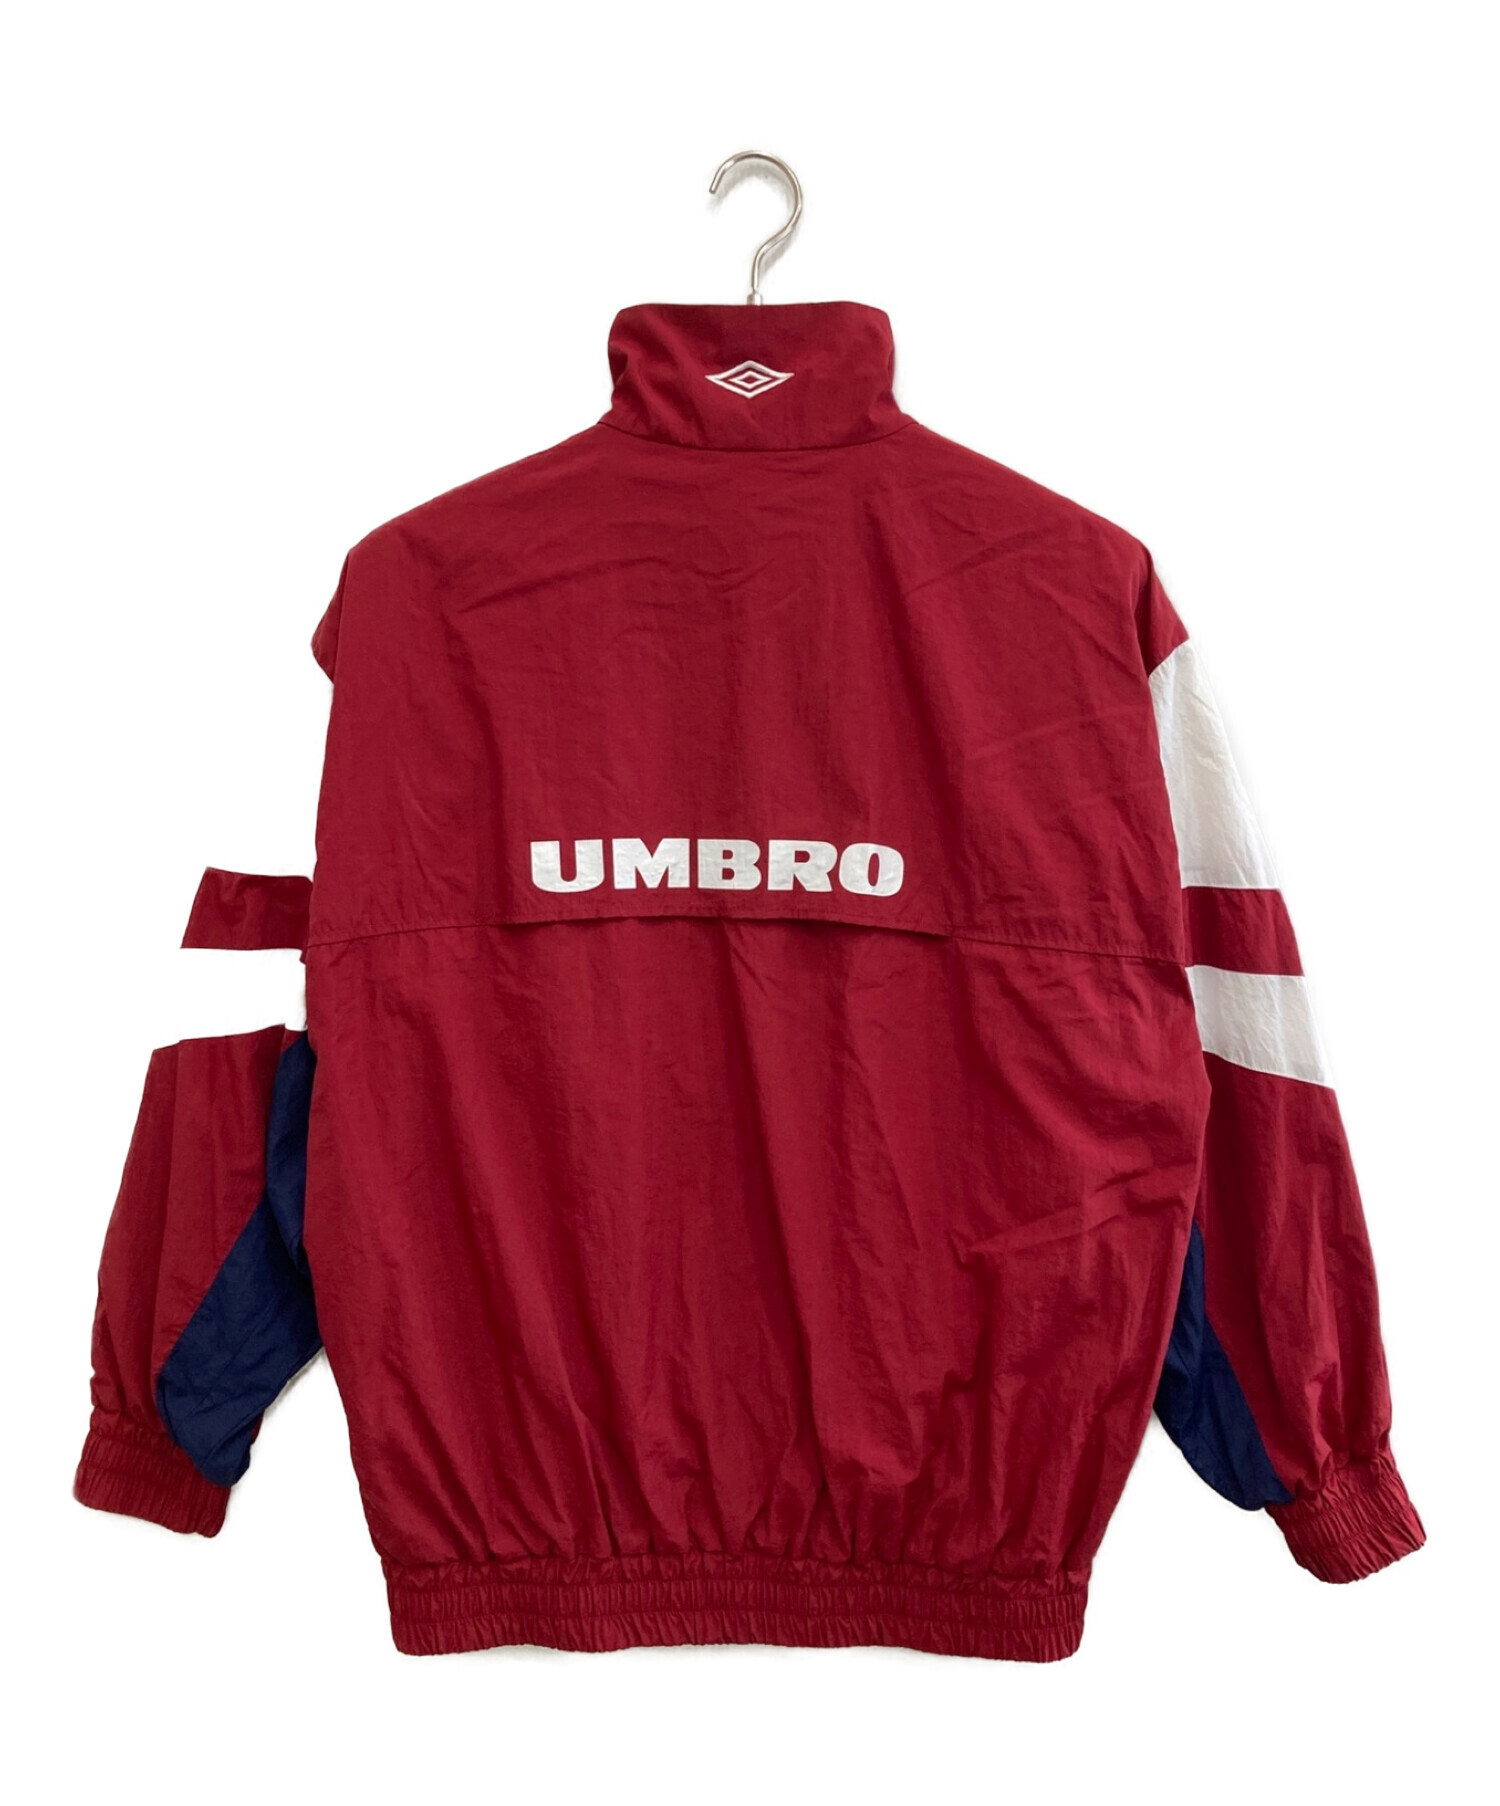 UMBRO (アンブロ) moussy (マウジー) トラックジャケット レッド サイズ:FREE